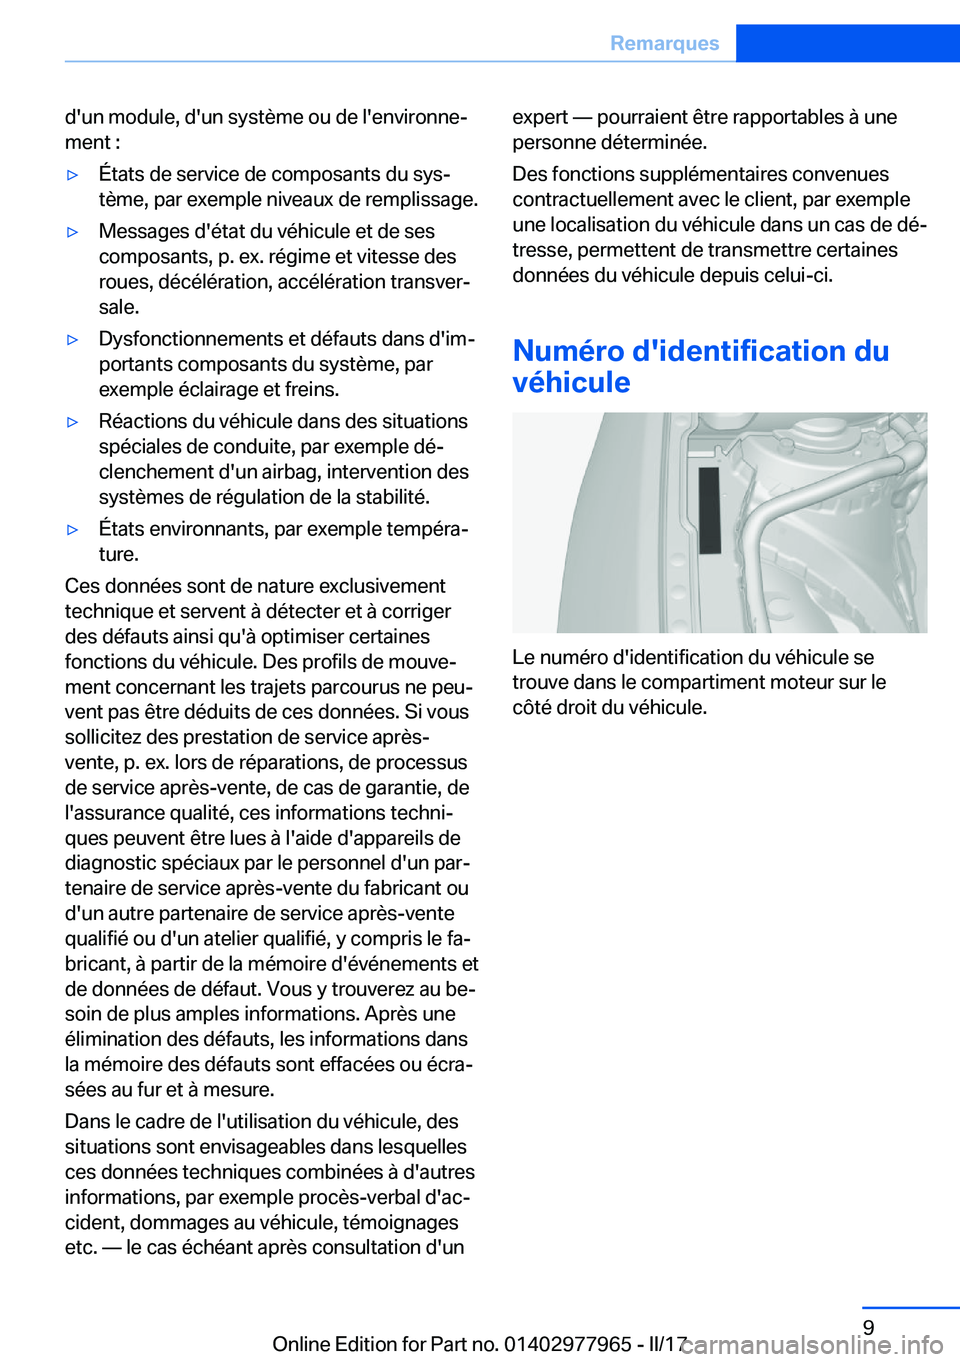 BMW 3 SERIES 2017  Notices Demploi (in French) �d�'�u�n� �m�o�d�u�l�e�,� �d�'�u�n� �s�y�s�t�è�m�e� �o�u� �d�e� �l�'�e�n�v�i�r�o�n�n�ej�m�e�n�t� �:'y�É�t�a�t�s� �d�e� �s�e�r�v�i�c�e� �d�e� �c�o�m�p�o�s�a�n�t�s� �d�u� �s�y�sj
�t�